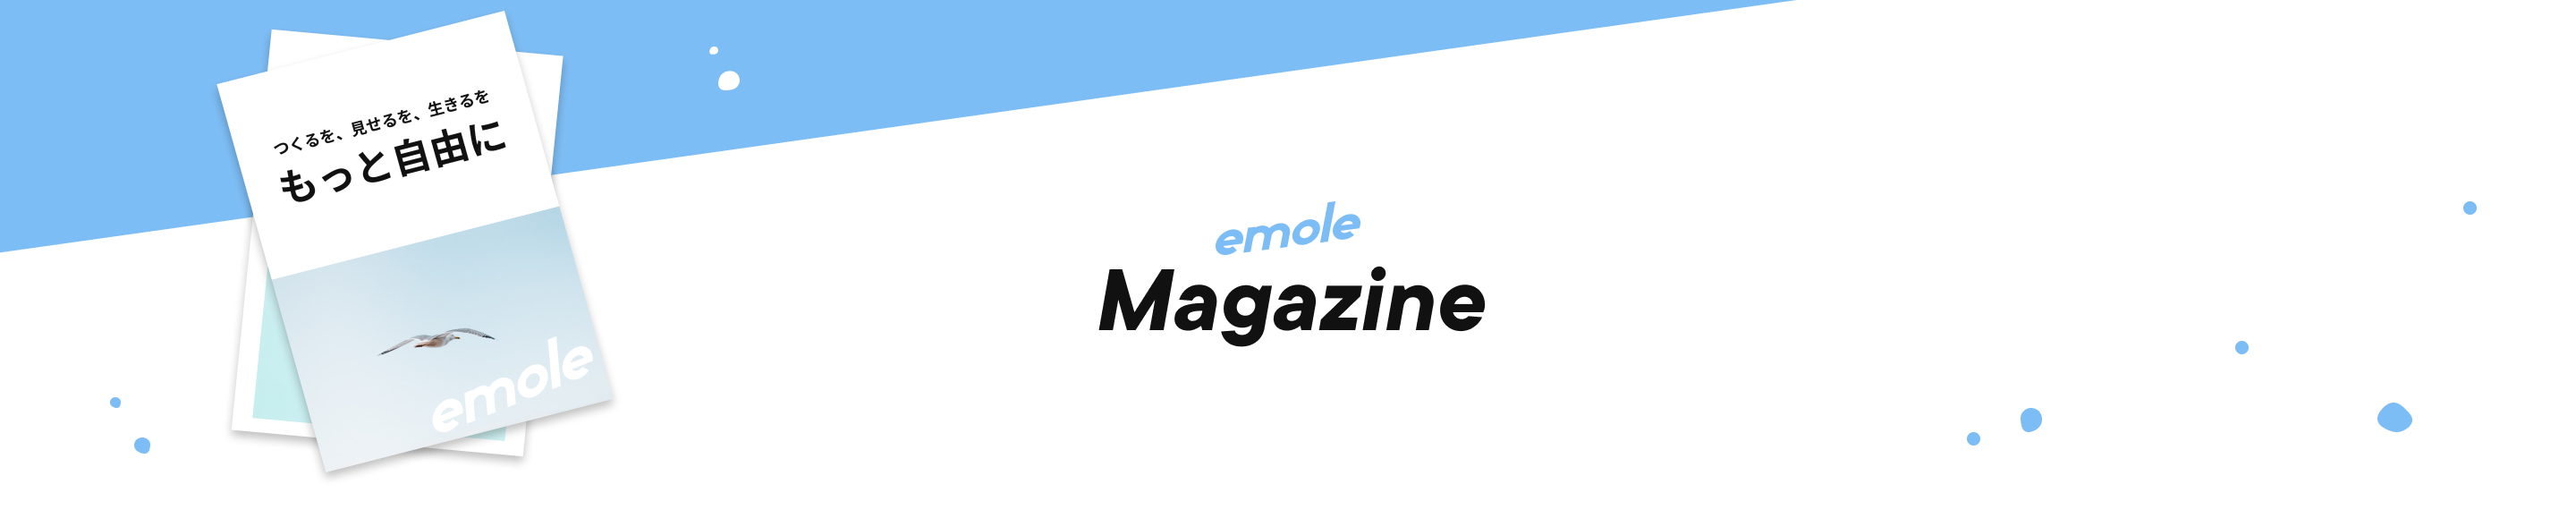 emole Magazine